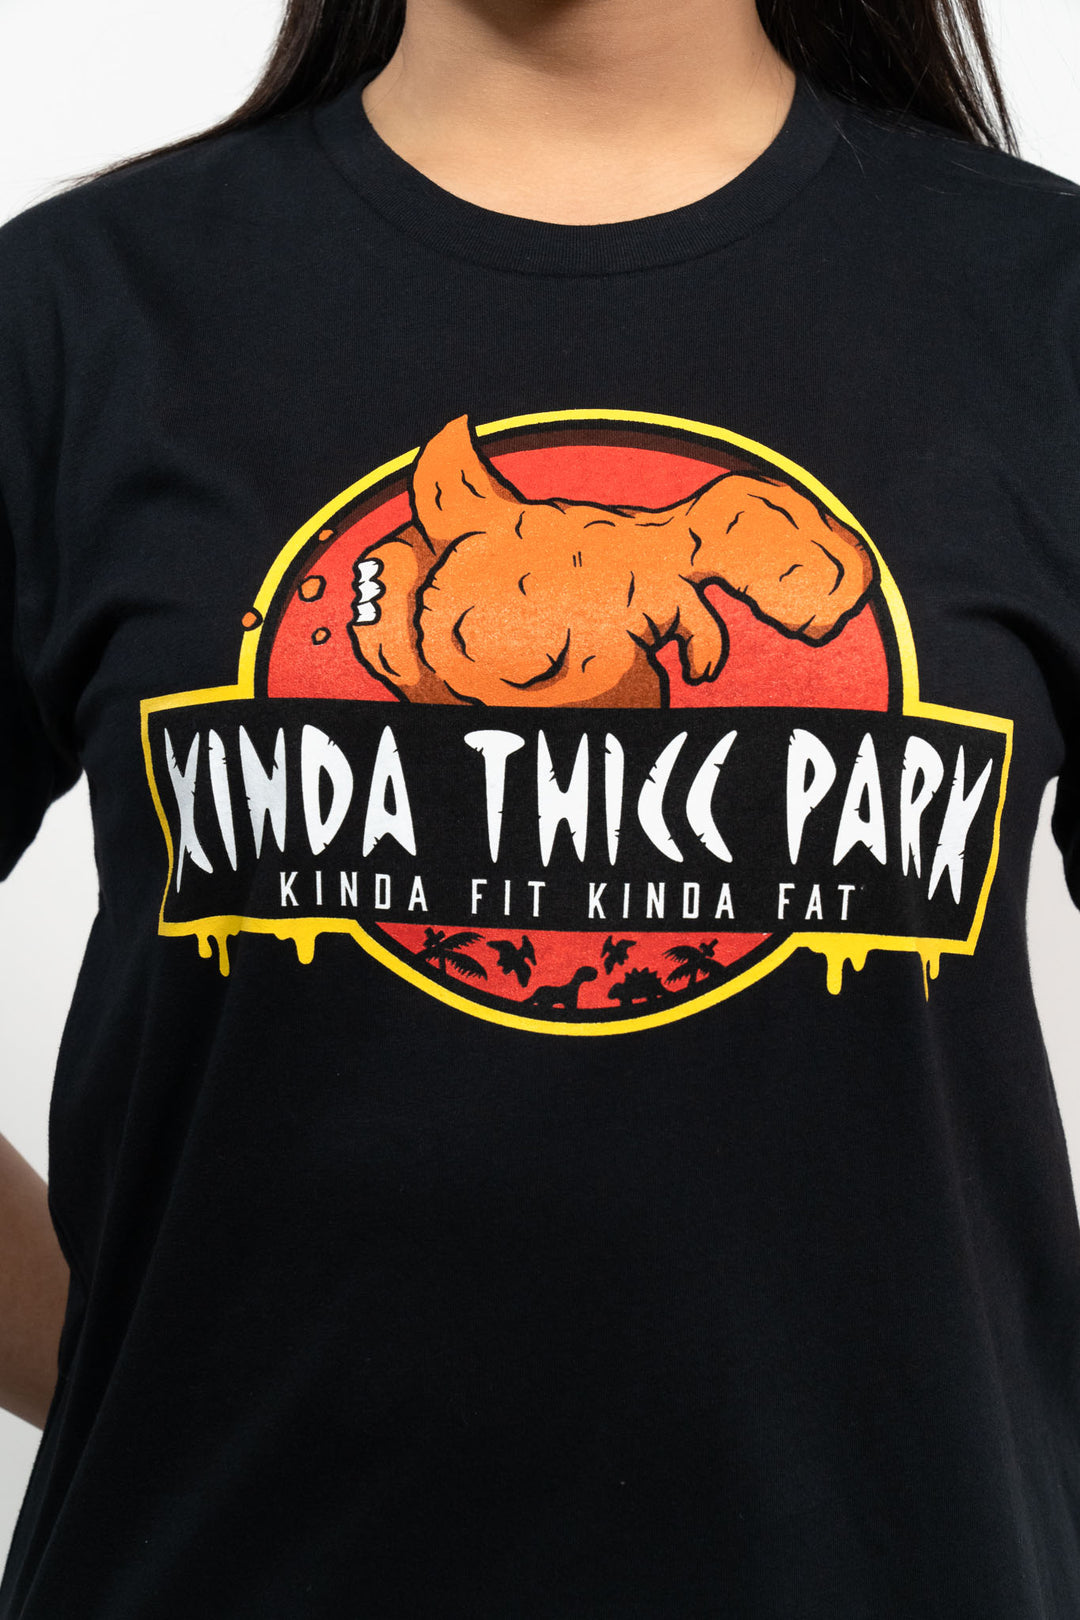 Kinda Thicc Park Shirt